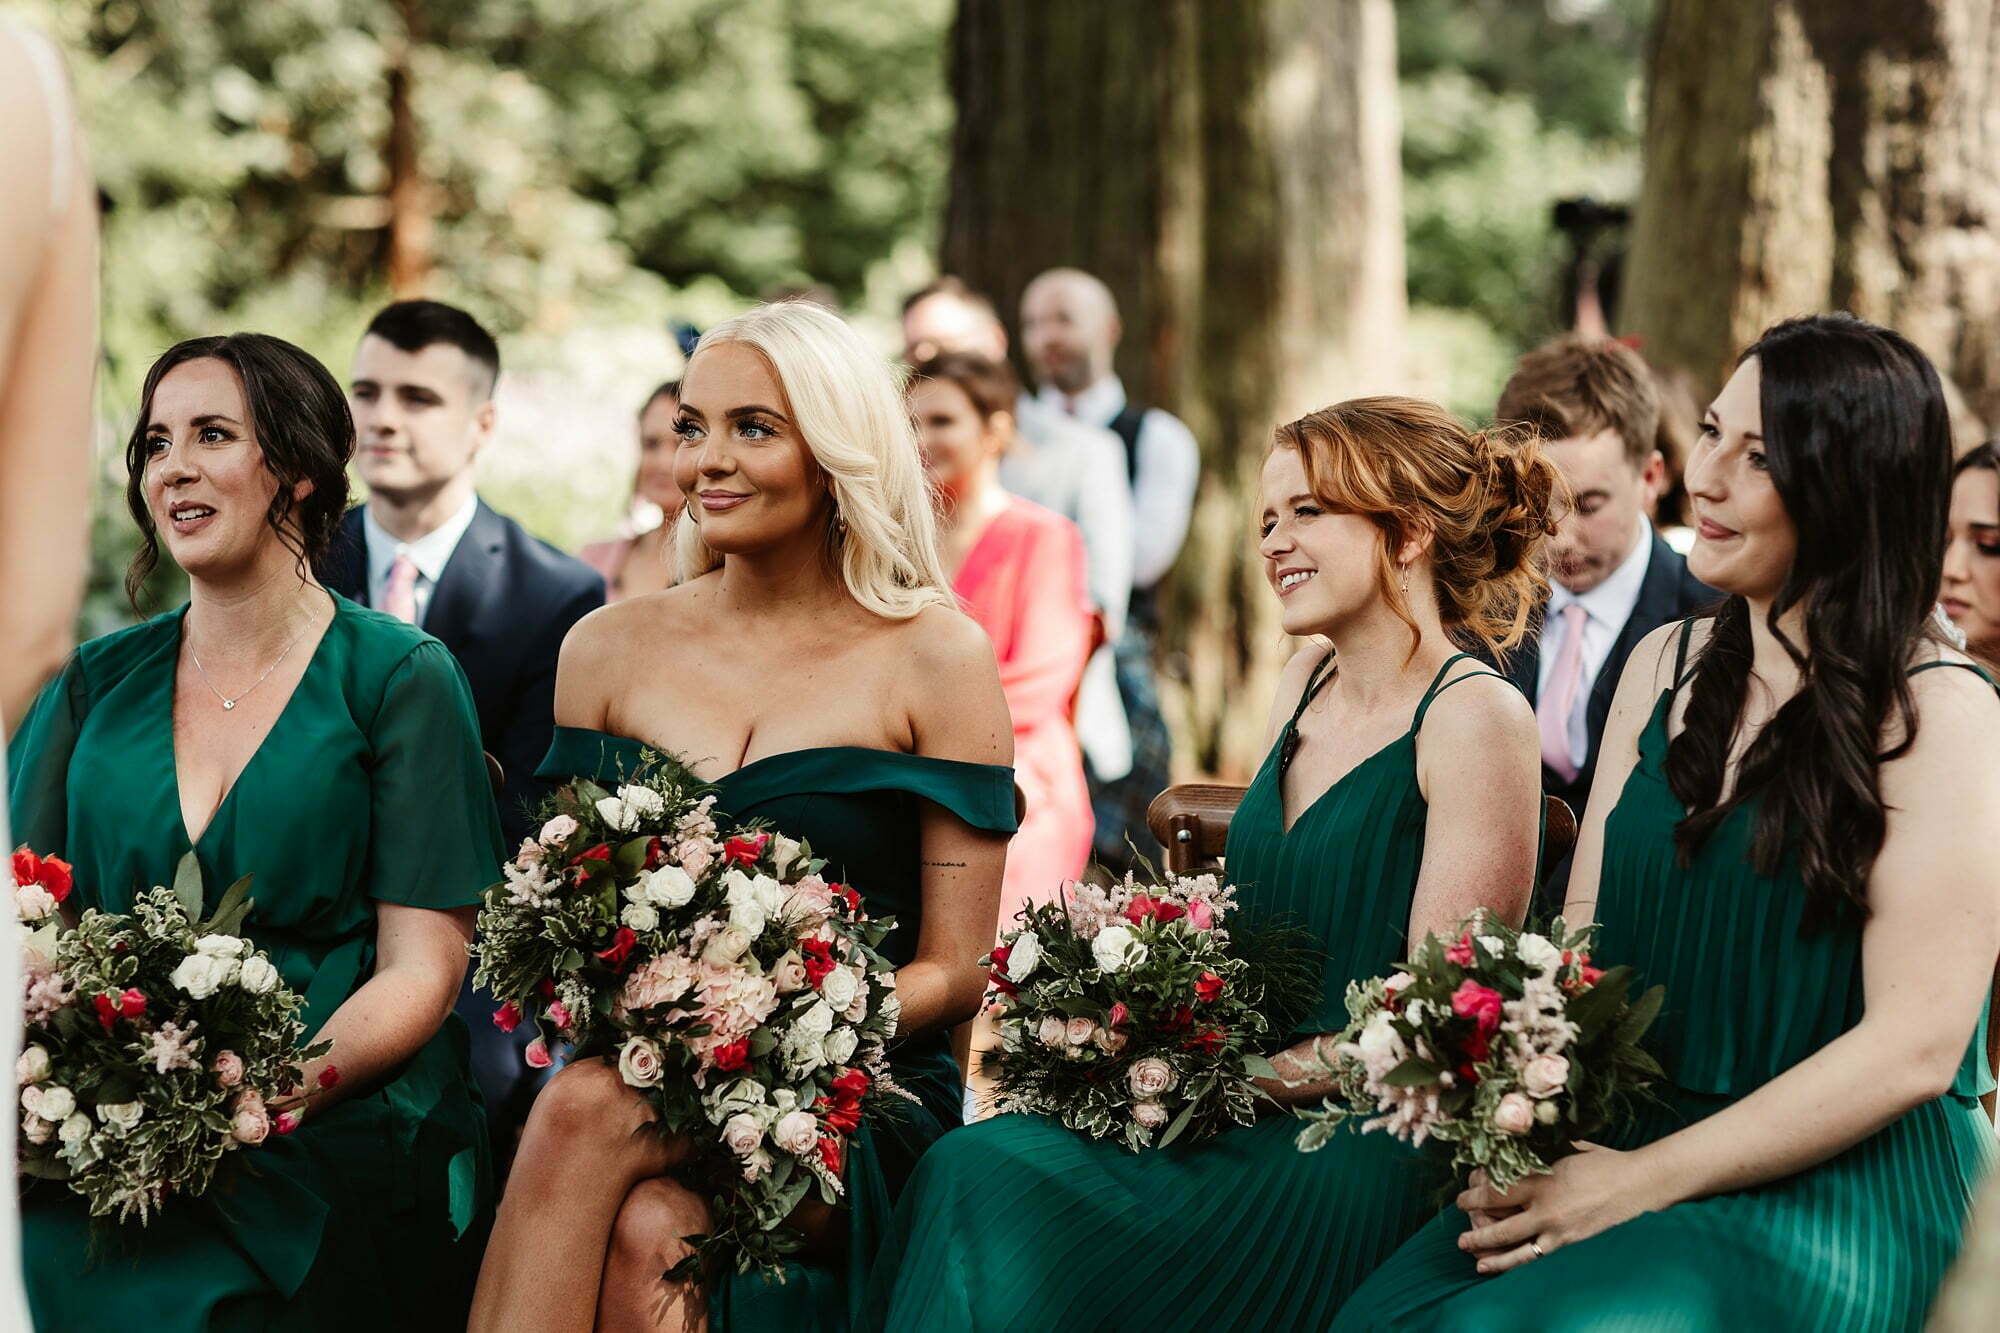 edinburgh botanic garden micro wedding bridesmaids dresses outdoor ceremony